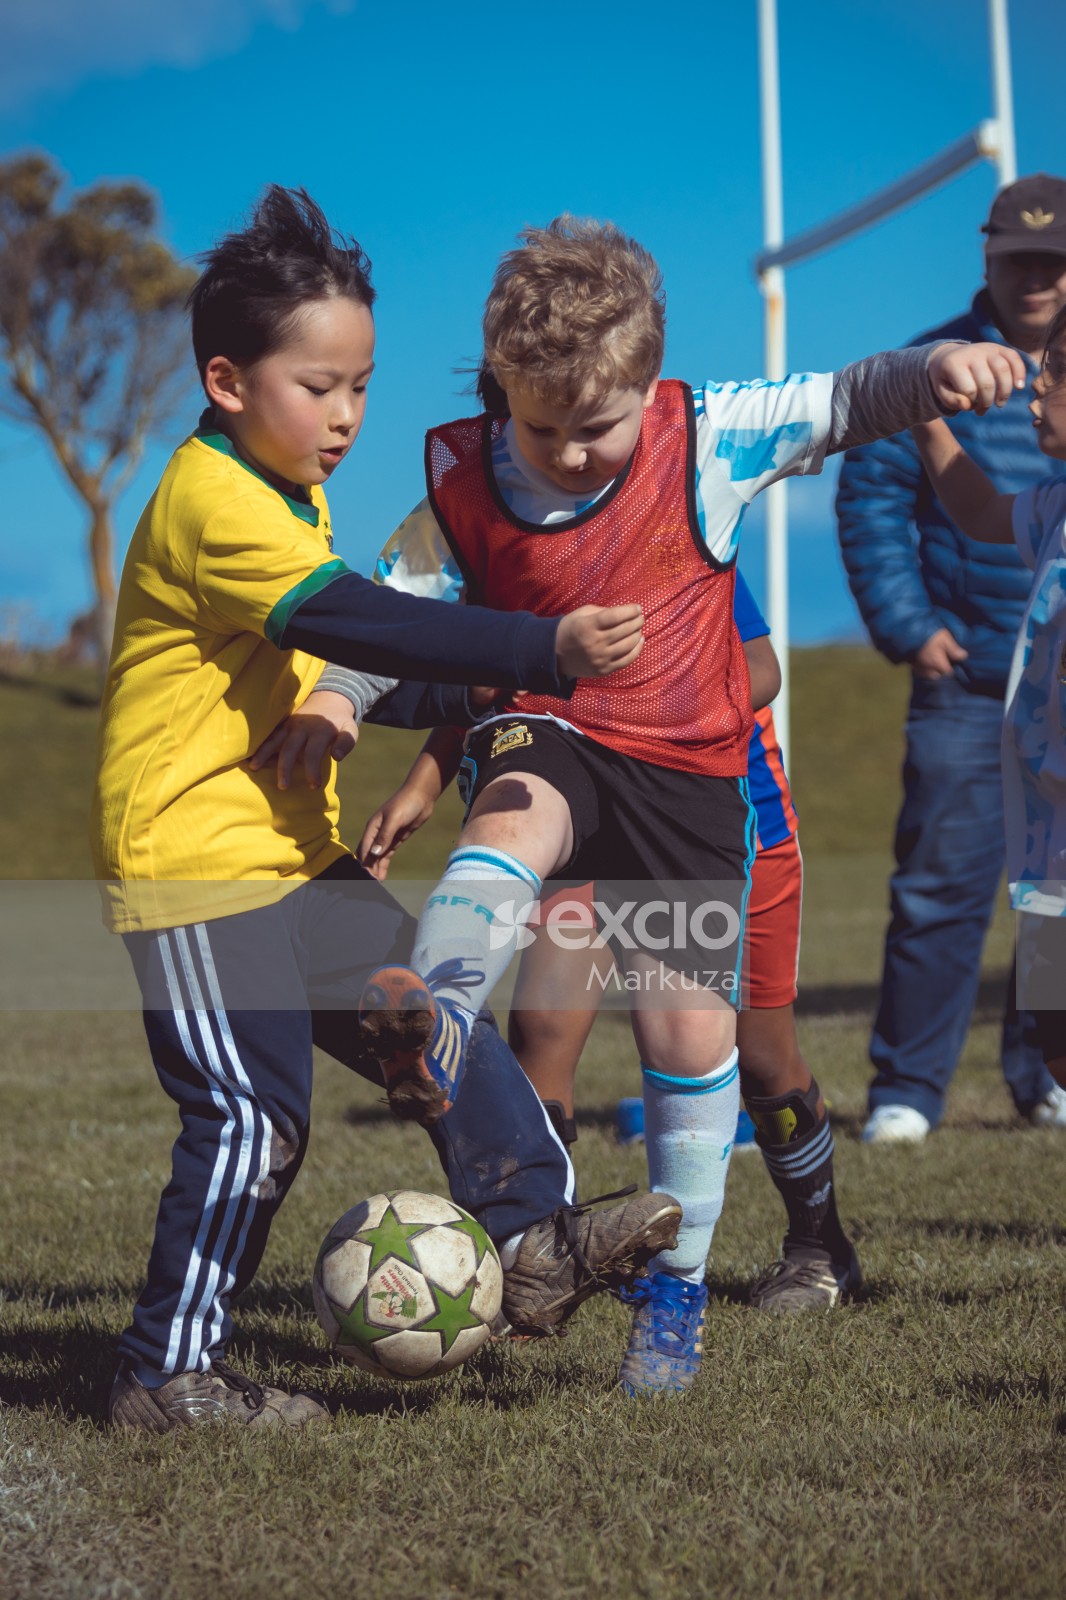 Young boys kicking a football during a football match